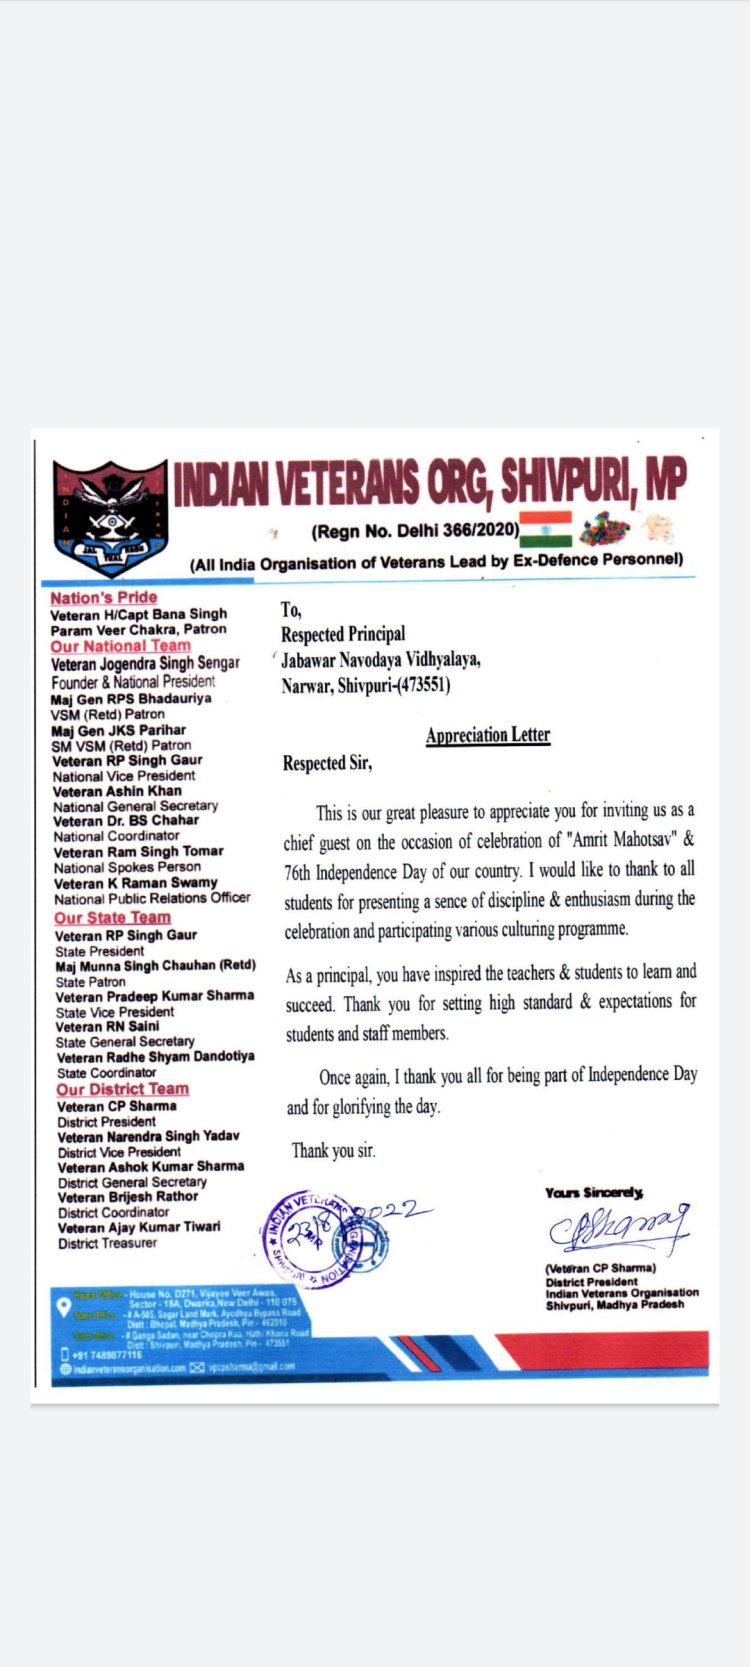 भारतीय पूर्व सैनिक संगठन जनसेवा के जिला अध्यक्ष सी पी शर्मा जी ने जवाहर नवोदय विद्यालय नरवर को दिया धन्यवाद प्रशस्ति पत्र।